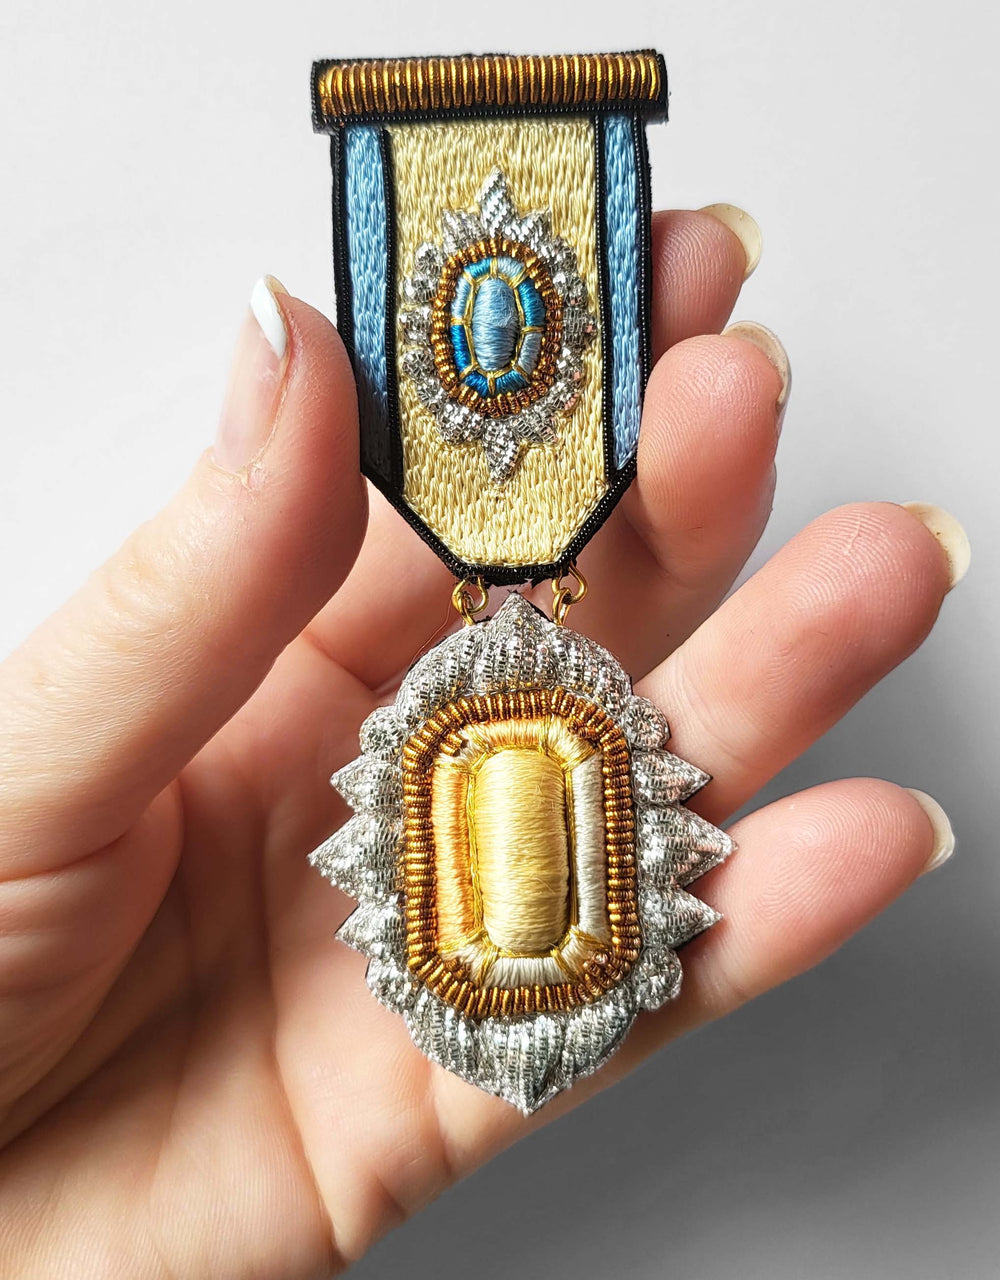 Youkounkoun Medal citrine and aquamarine